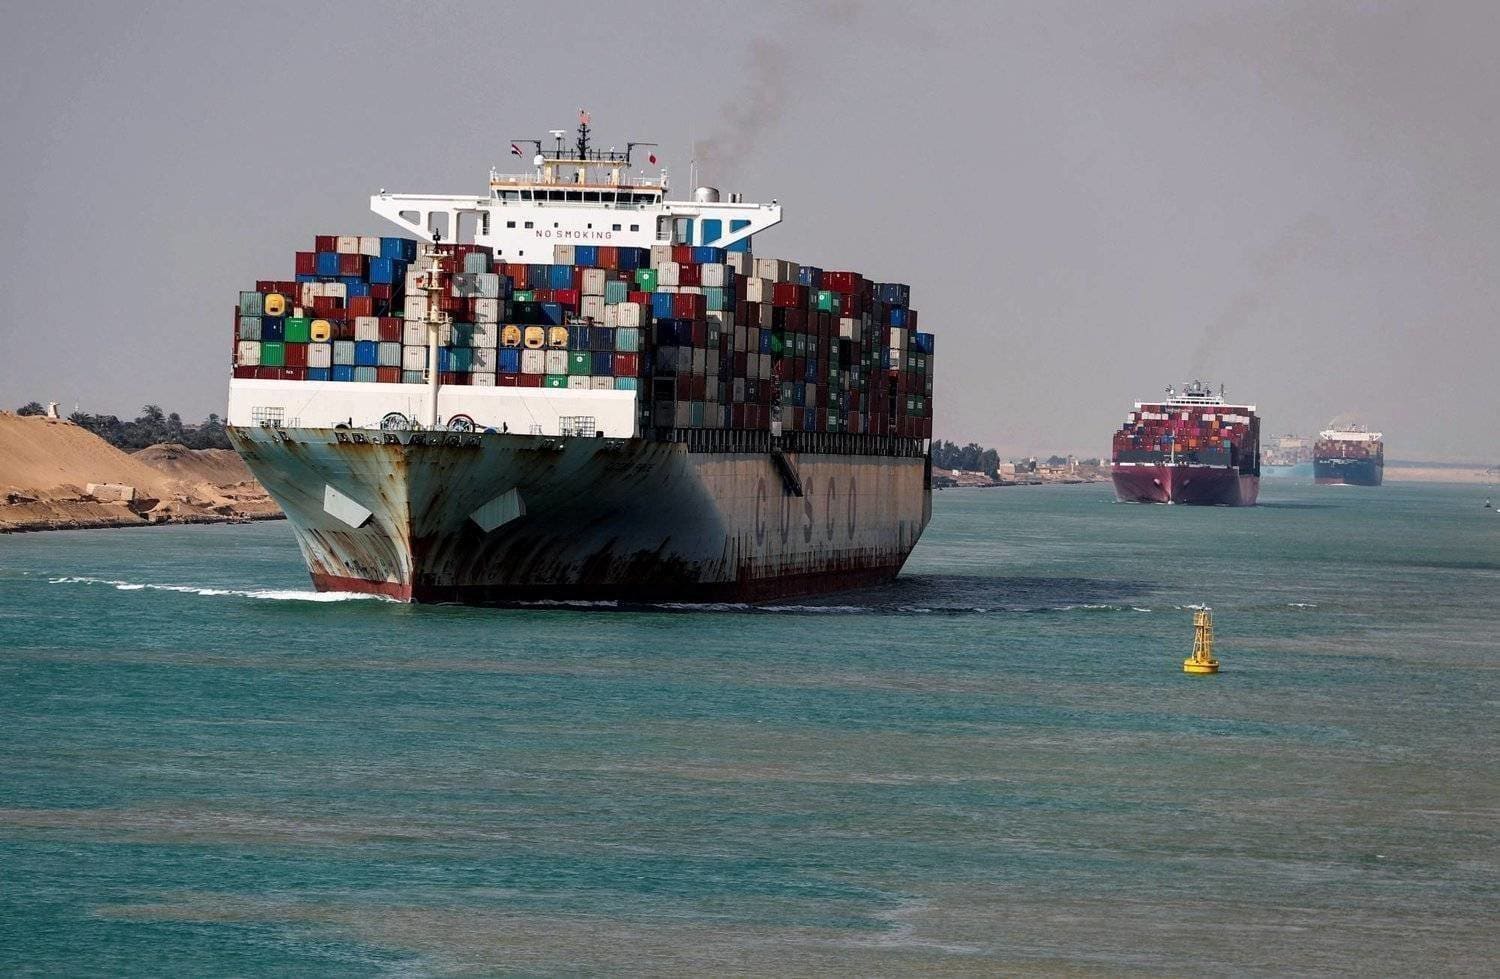 Maersk vessels retreat as explosions occur (Credits: Asharq Al Awsat)